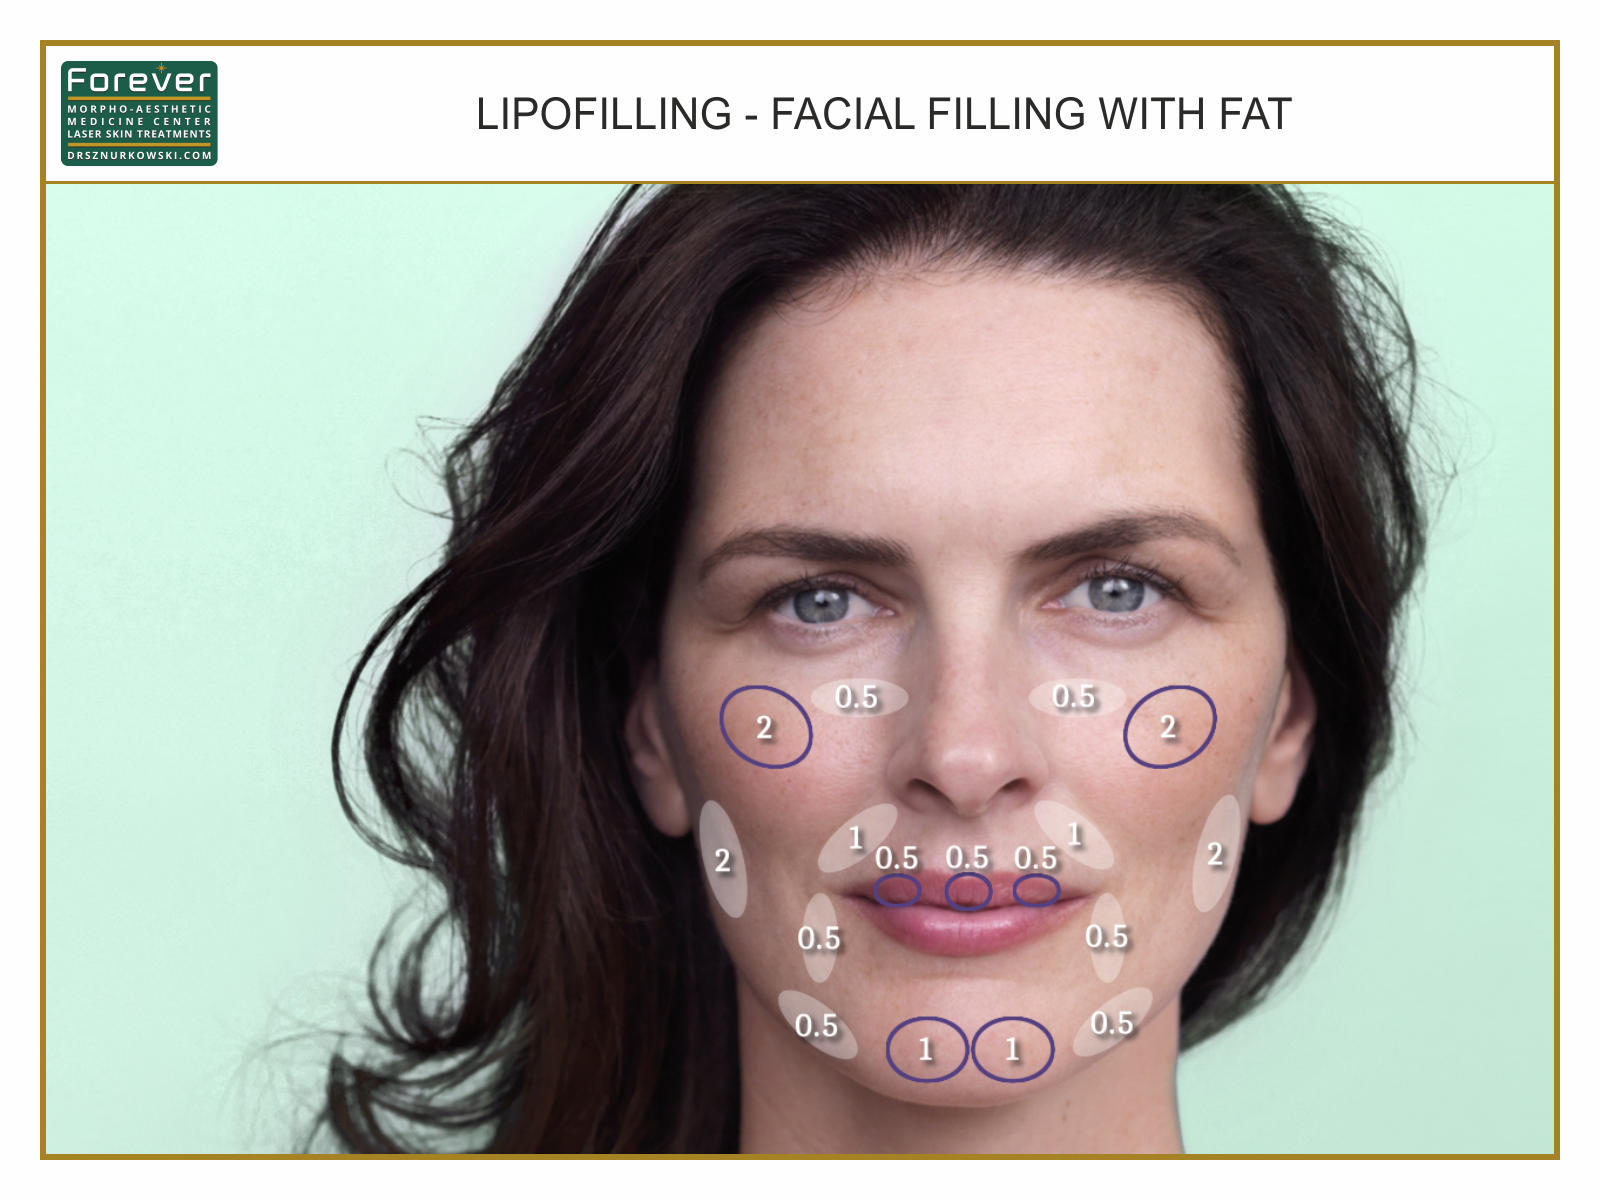 Lipofilling - Facial Filling With Fat (80x60) EN.jpg